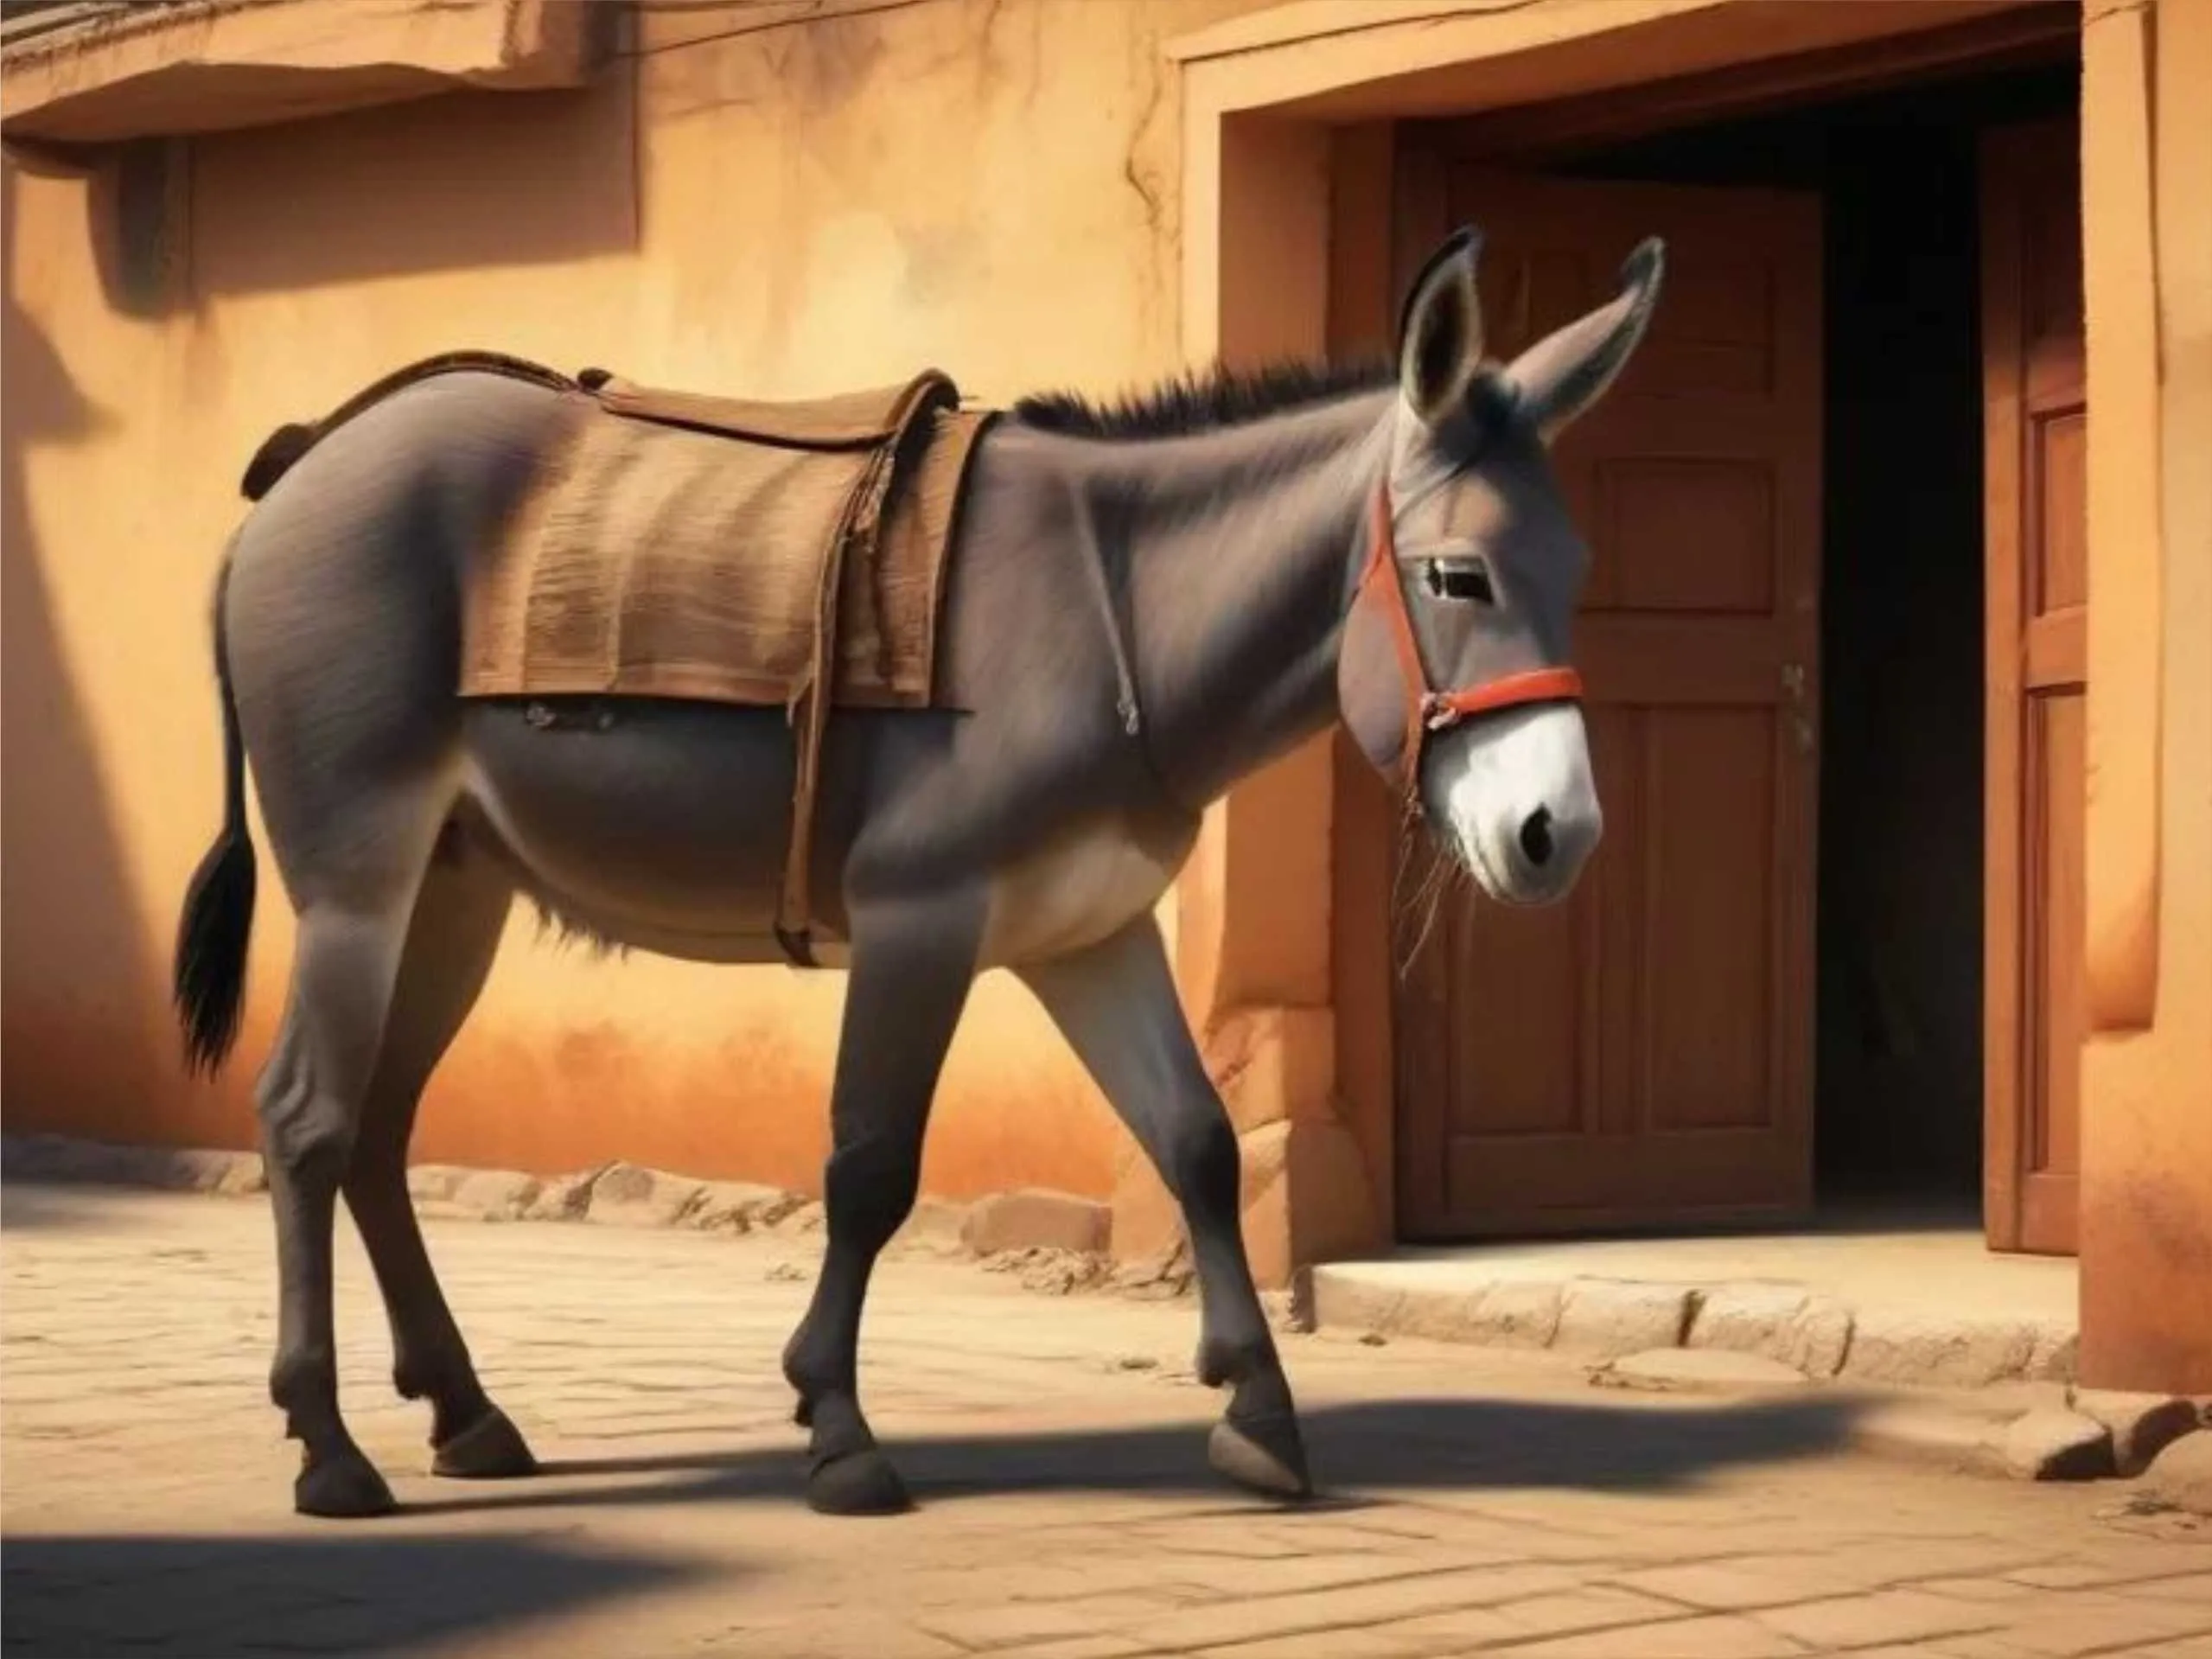 cartoon image of a donkey